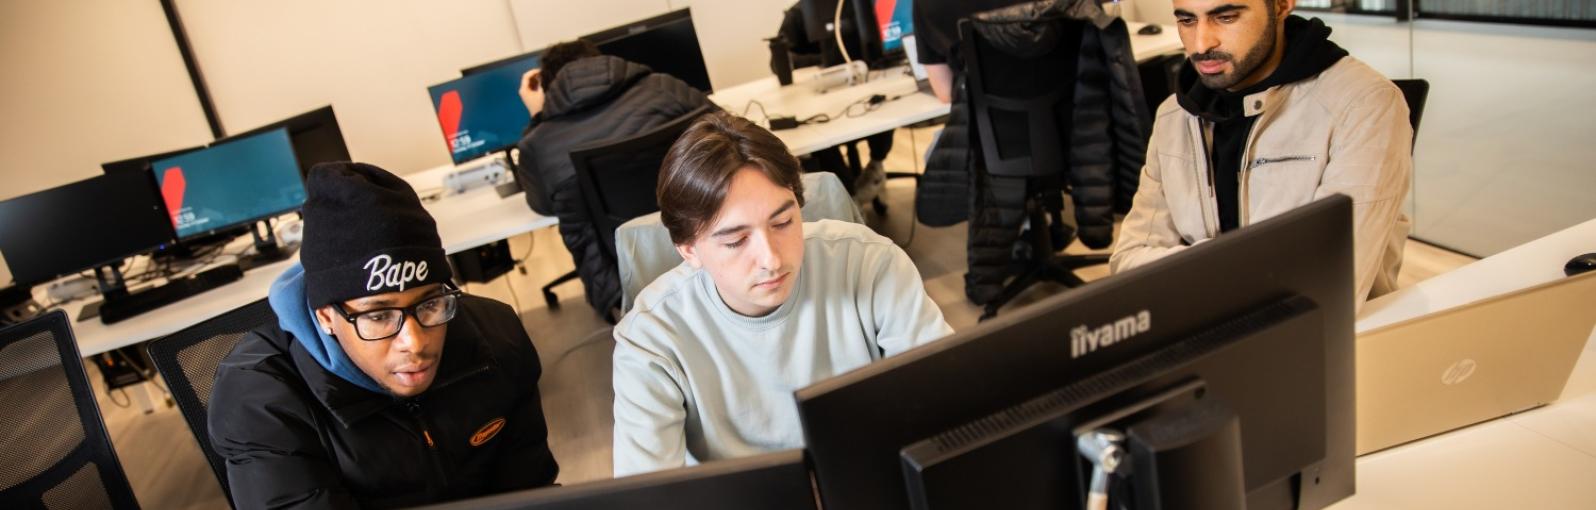 Three male students working together around three computer monitors